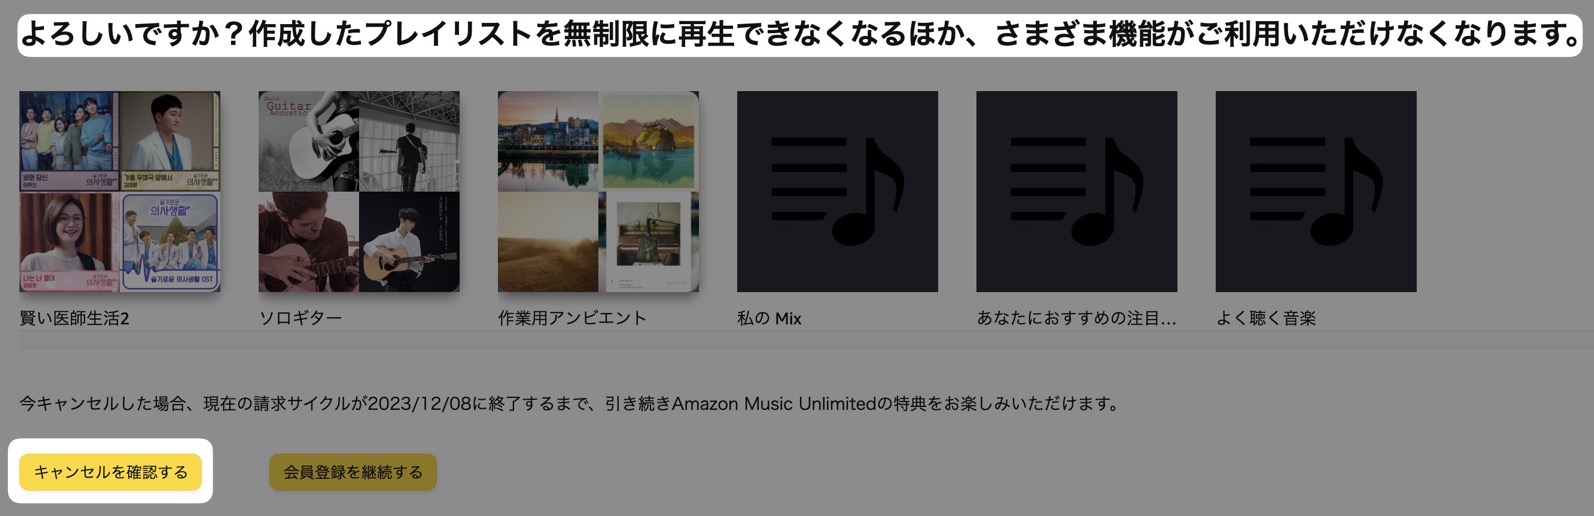 Amazon Music Unlimited 退会